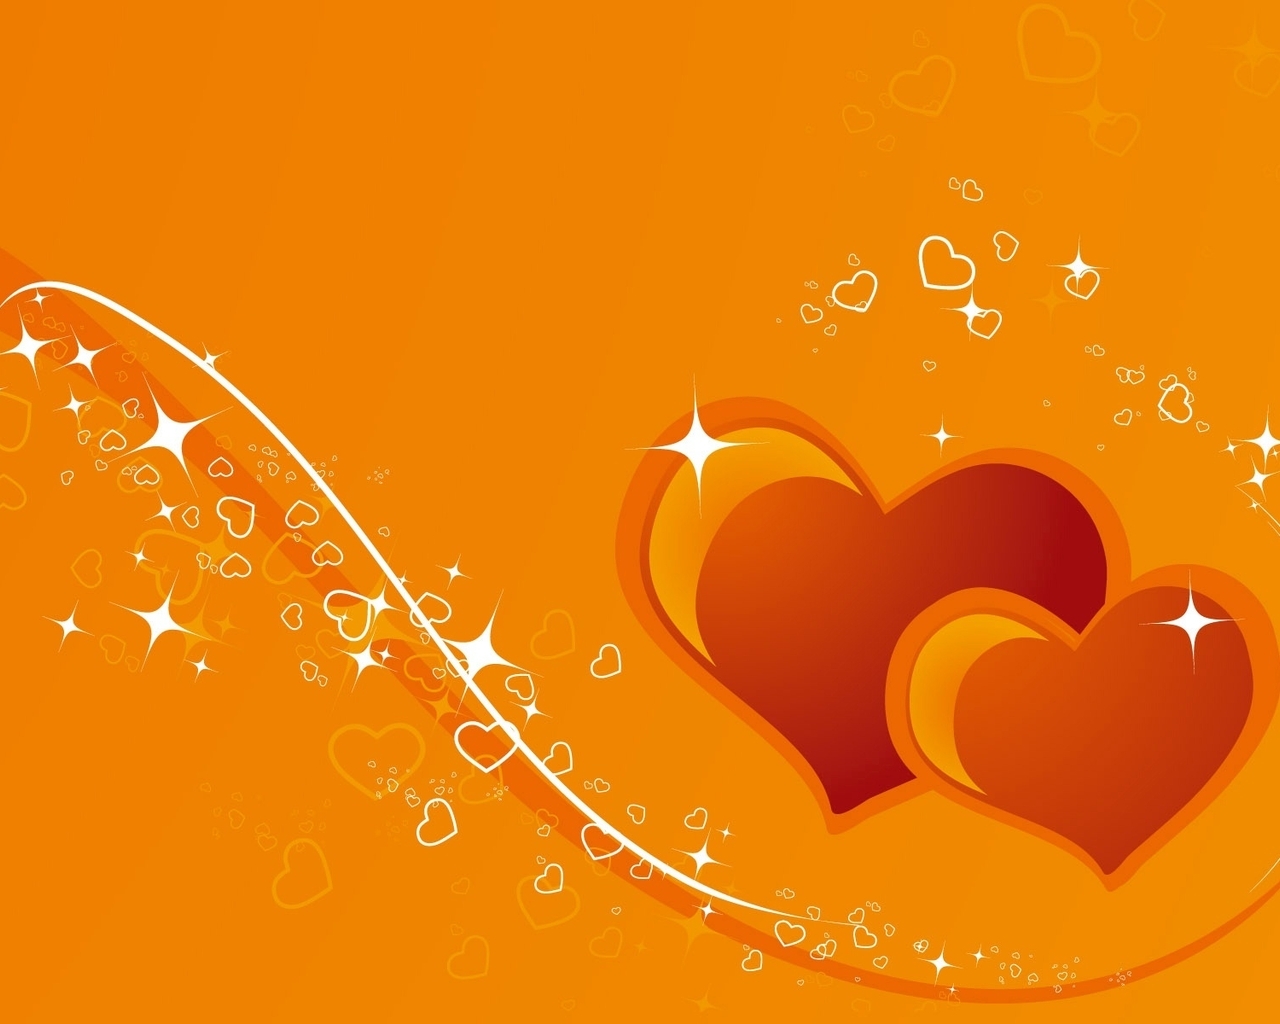 Image: Hearts, two, line, curve, glare, orange background